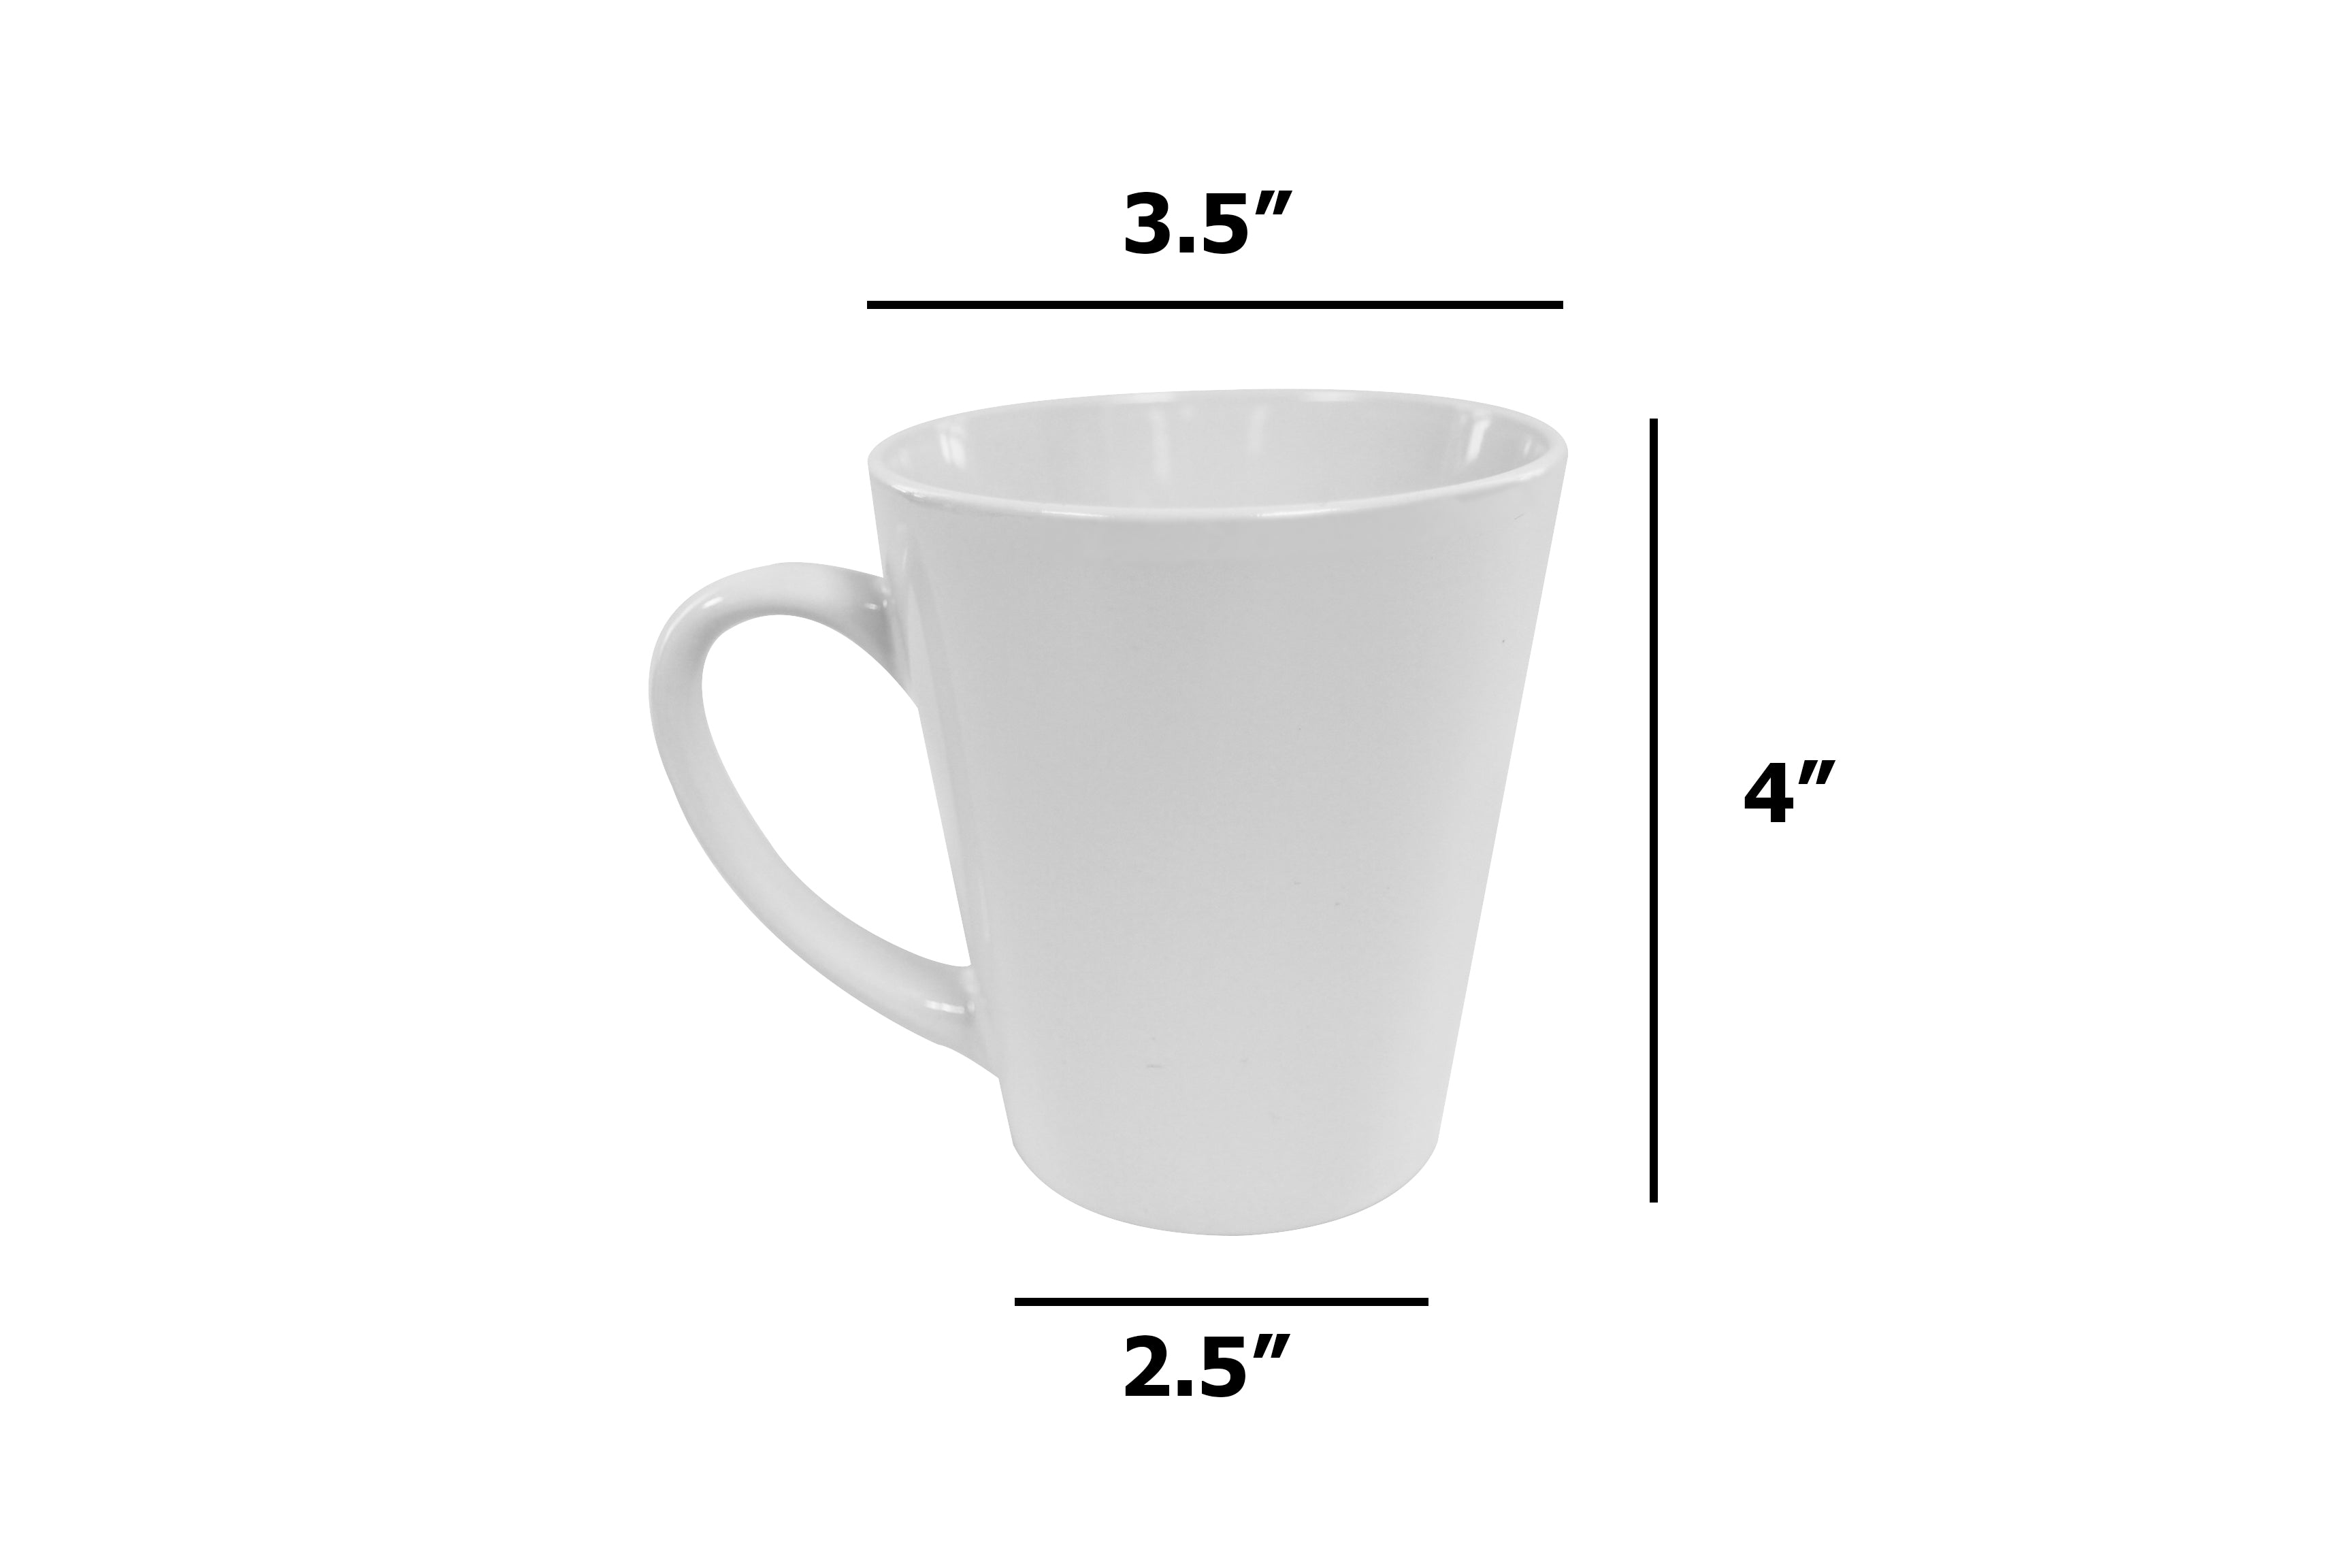 Pearl Coating™ 12oz Sublimation Latte White Mug - Case of 36 - Joto Imaging Supplies Canada